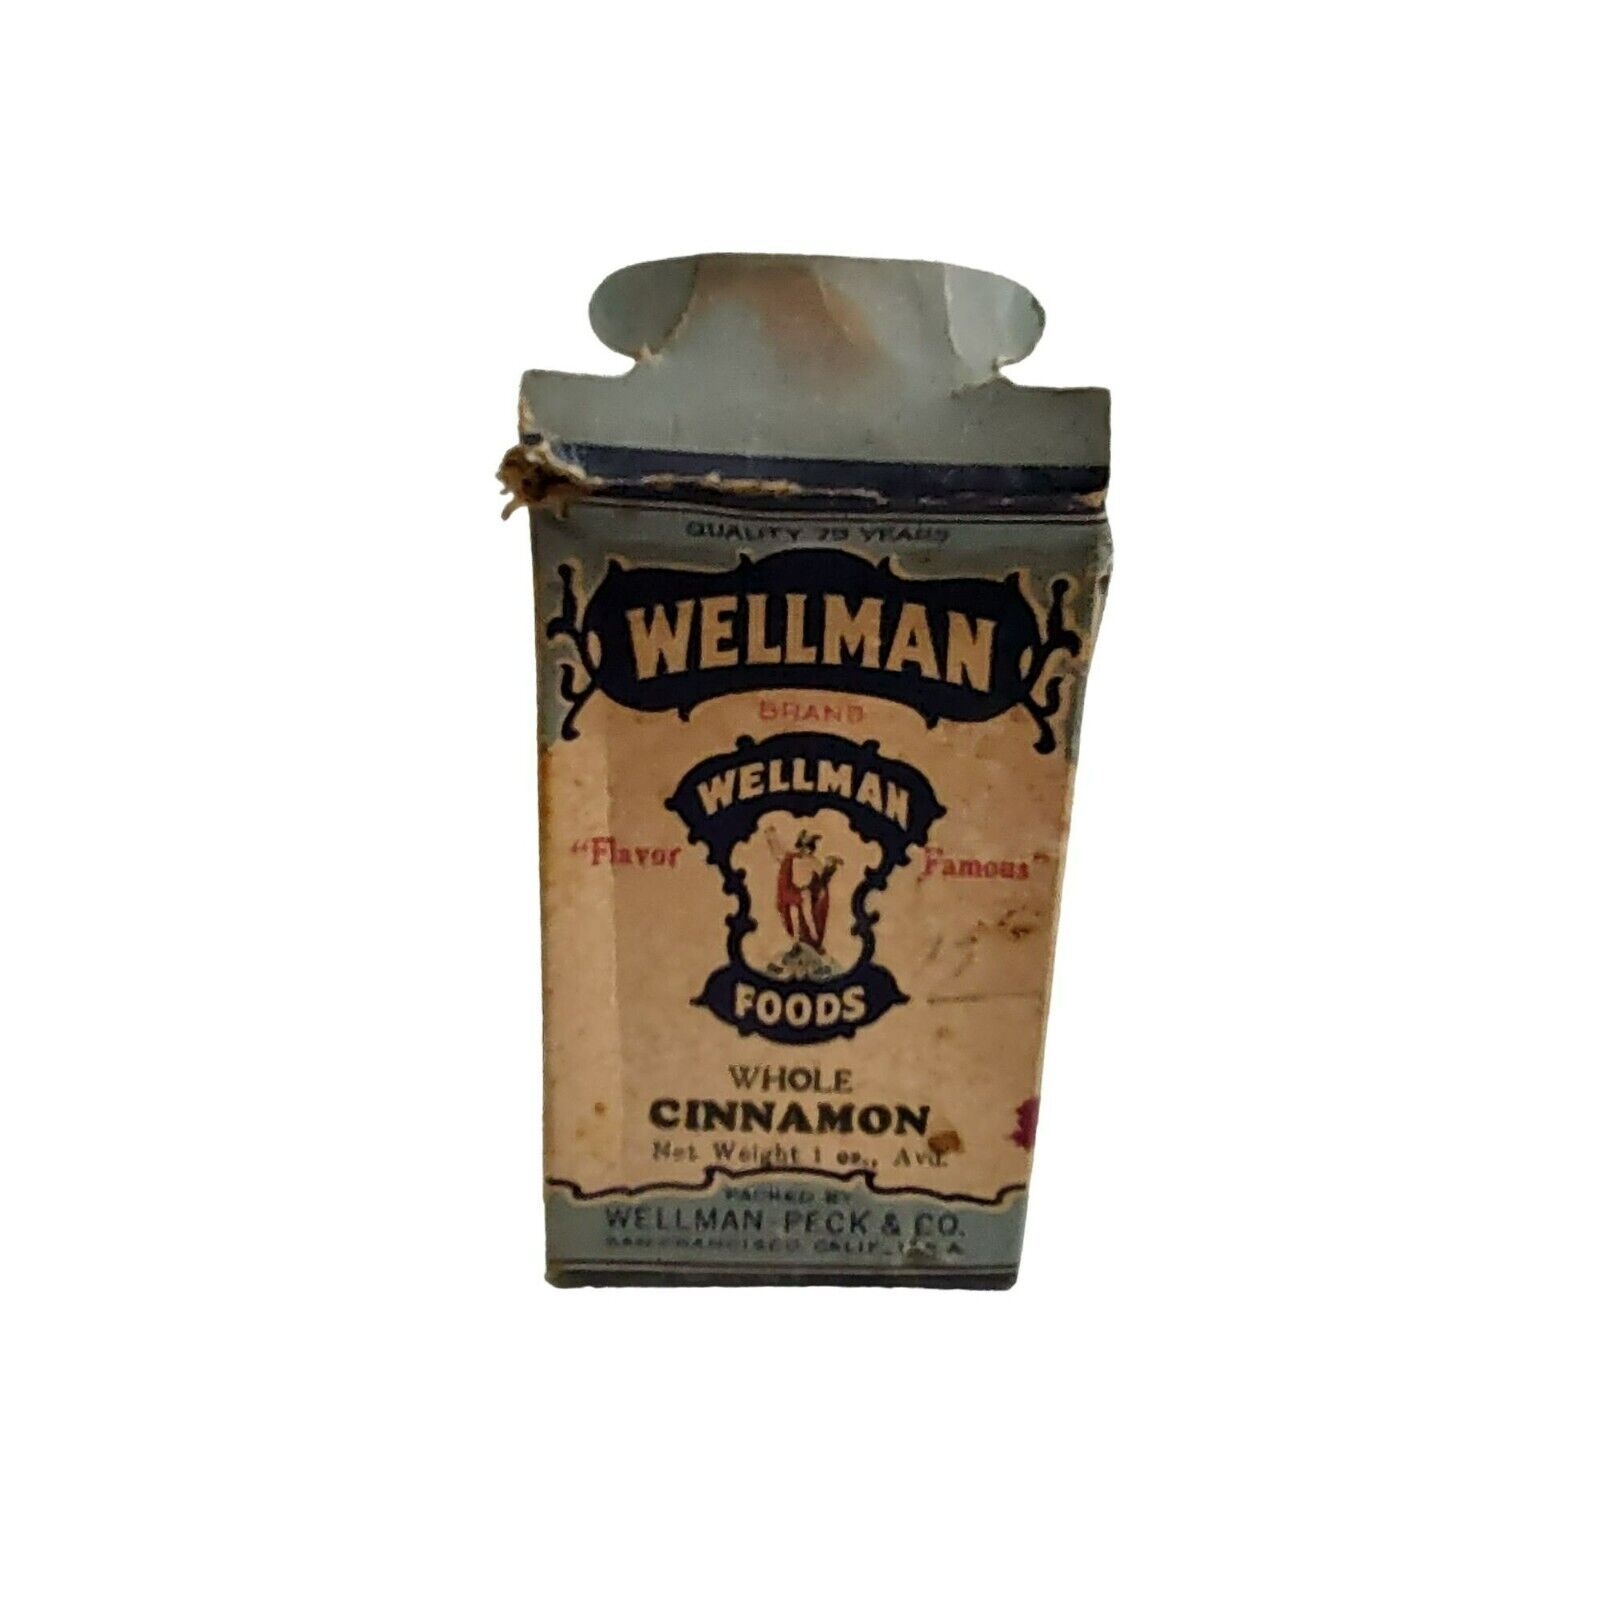 Wellman - Peck and Company Cinnamon Cardboard Spice Box Blue and Tan